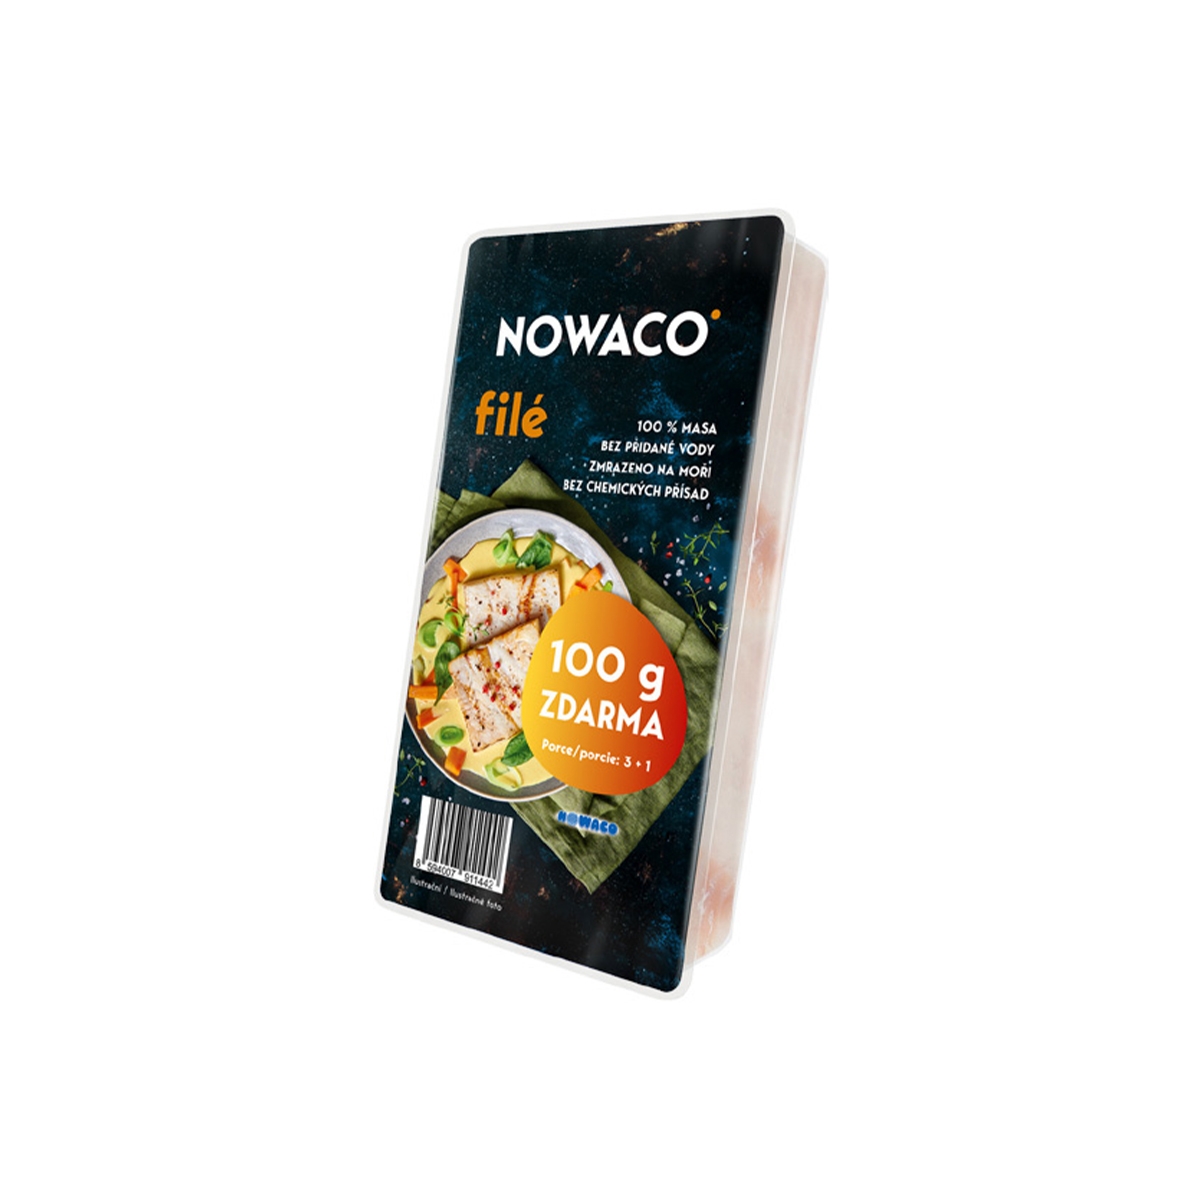 Rybí filé Nowaco 300 g+100 g zdarma